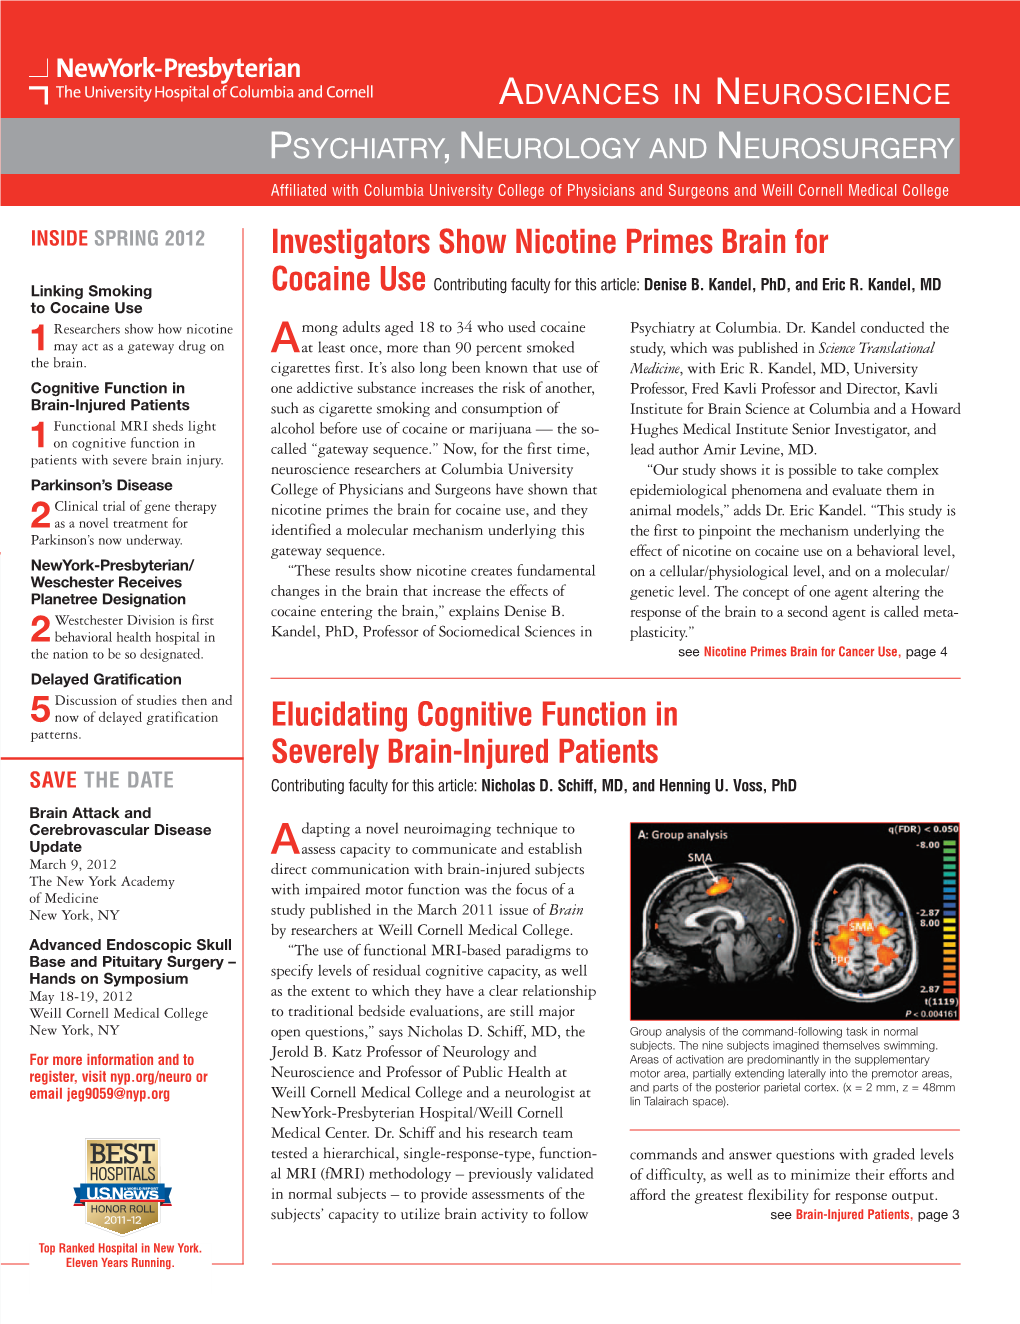 Elucidating Cognitive Function in Severely Brain-Injured Patients Investigators Show Nicotine Primes Brain